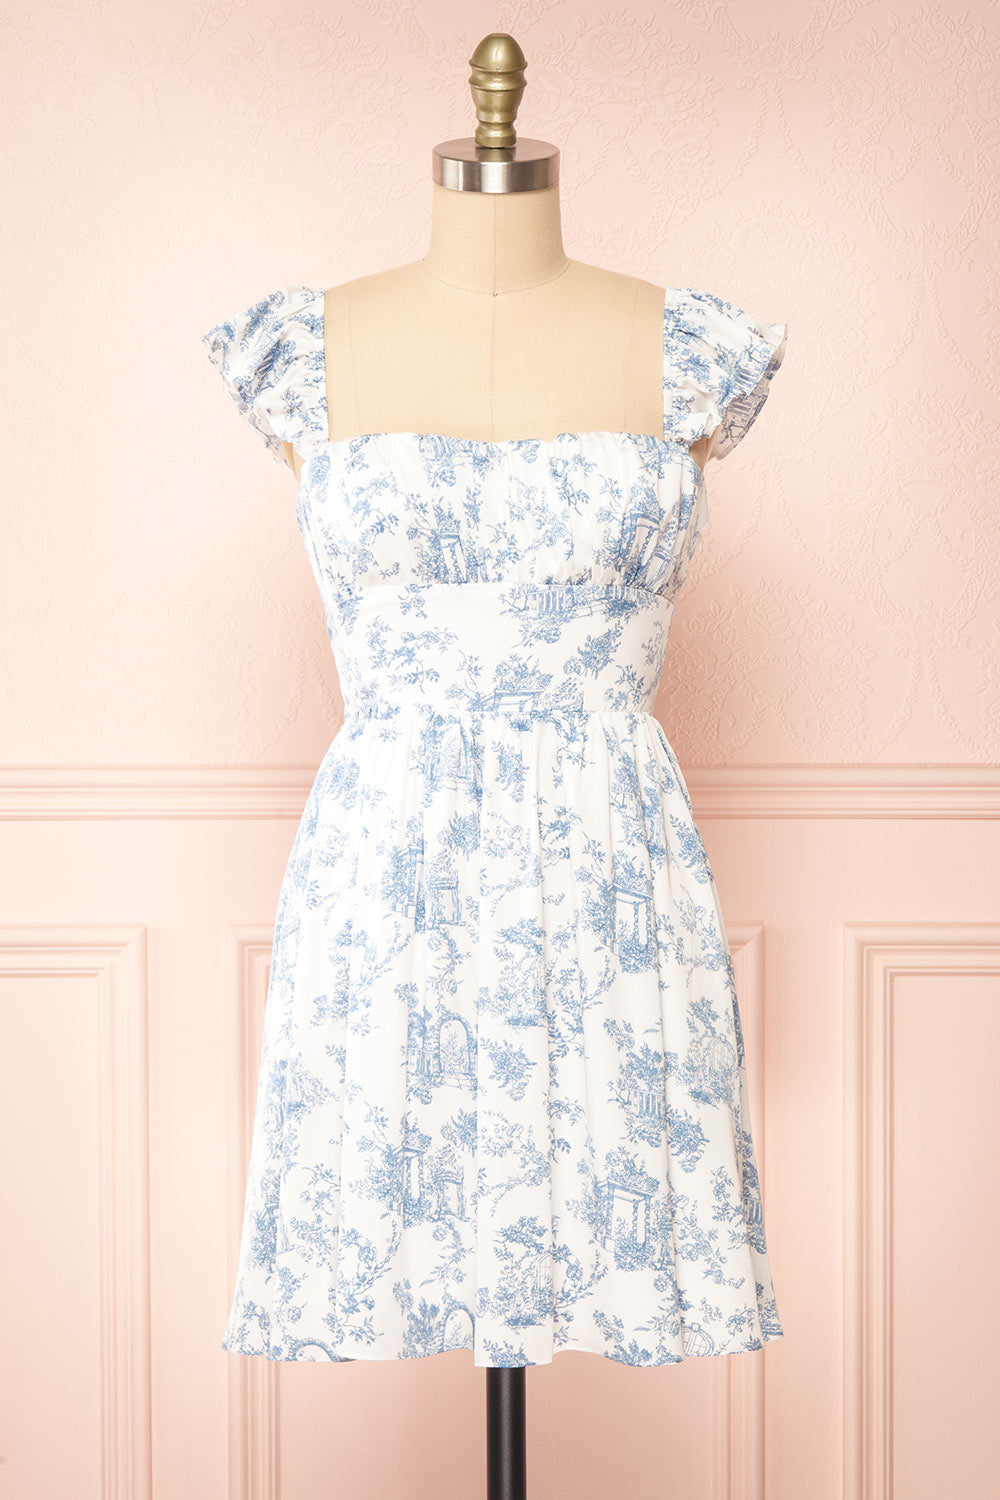 Thalia Short White & Blue Patterned Dress | Boutique 1861 front view